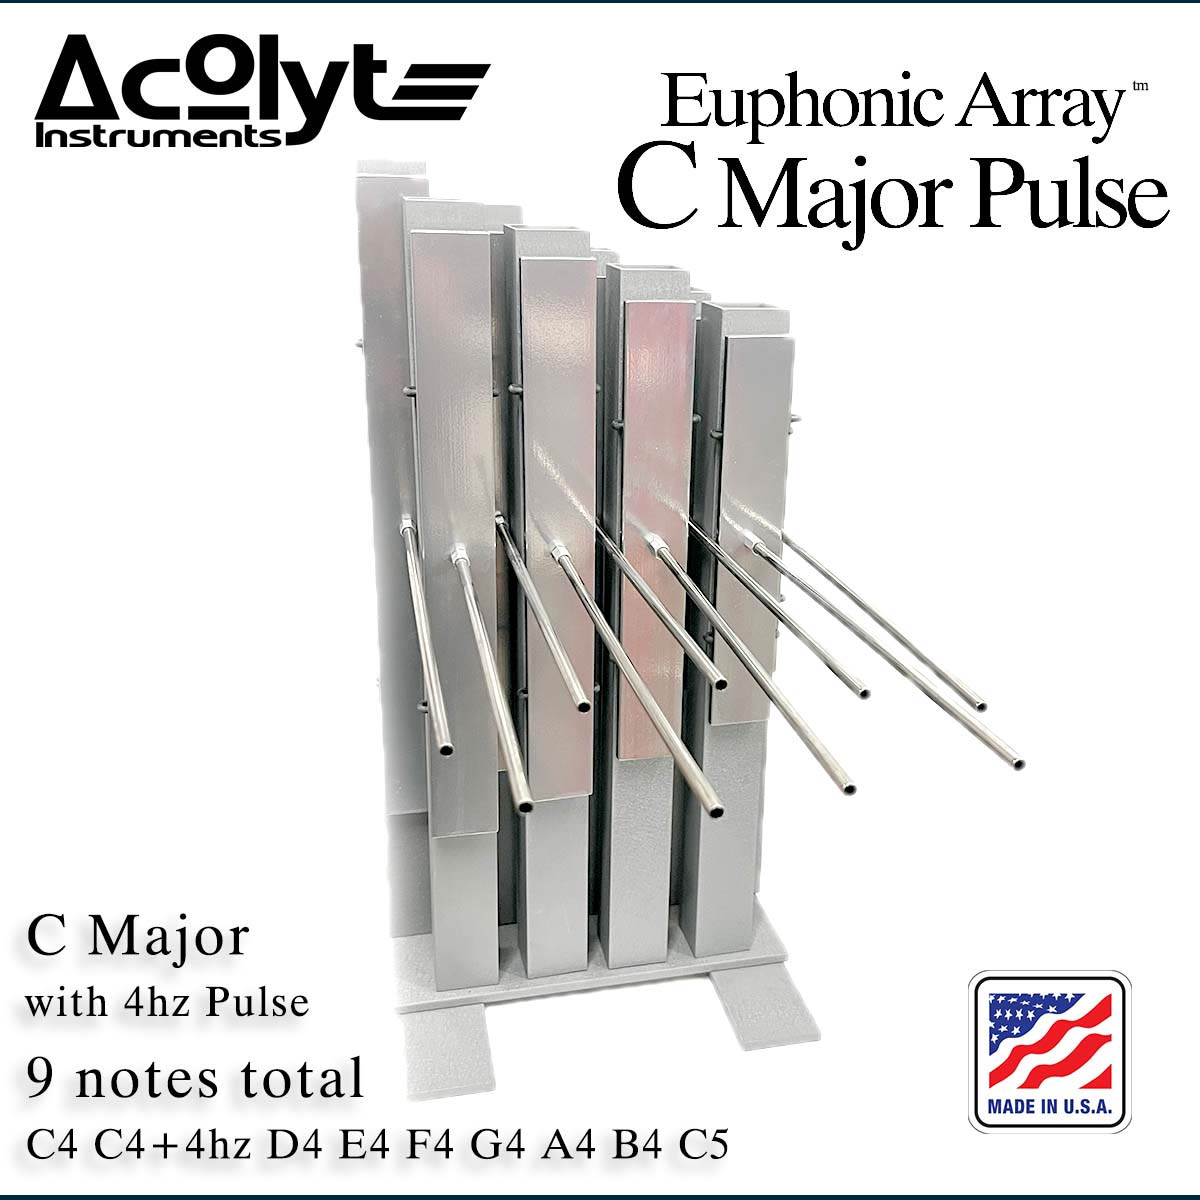 Acolyte Euphonic Array™ C Major Pulse